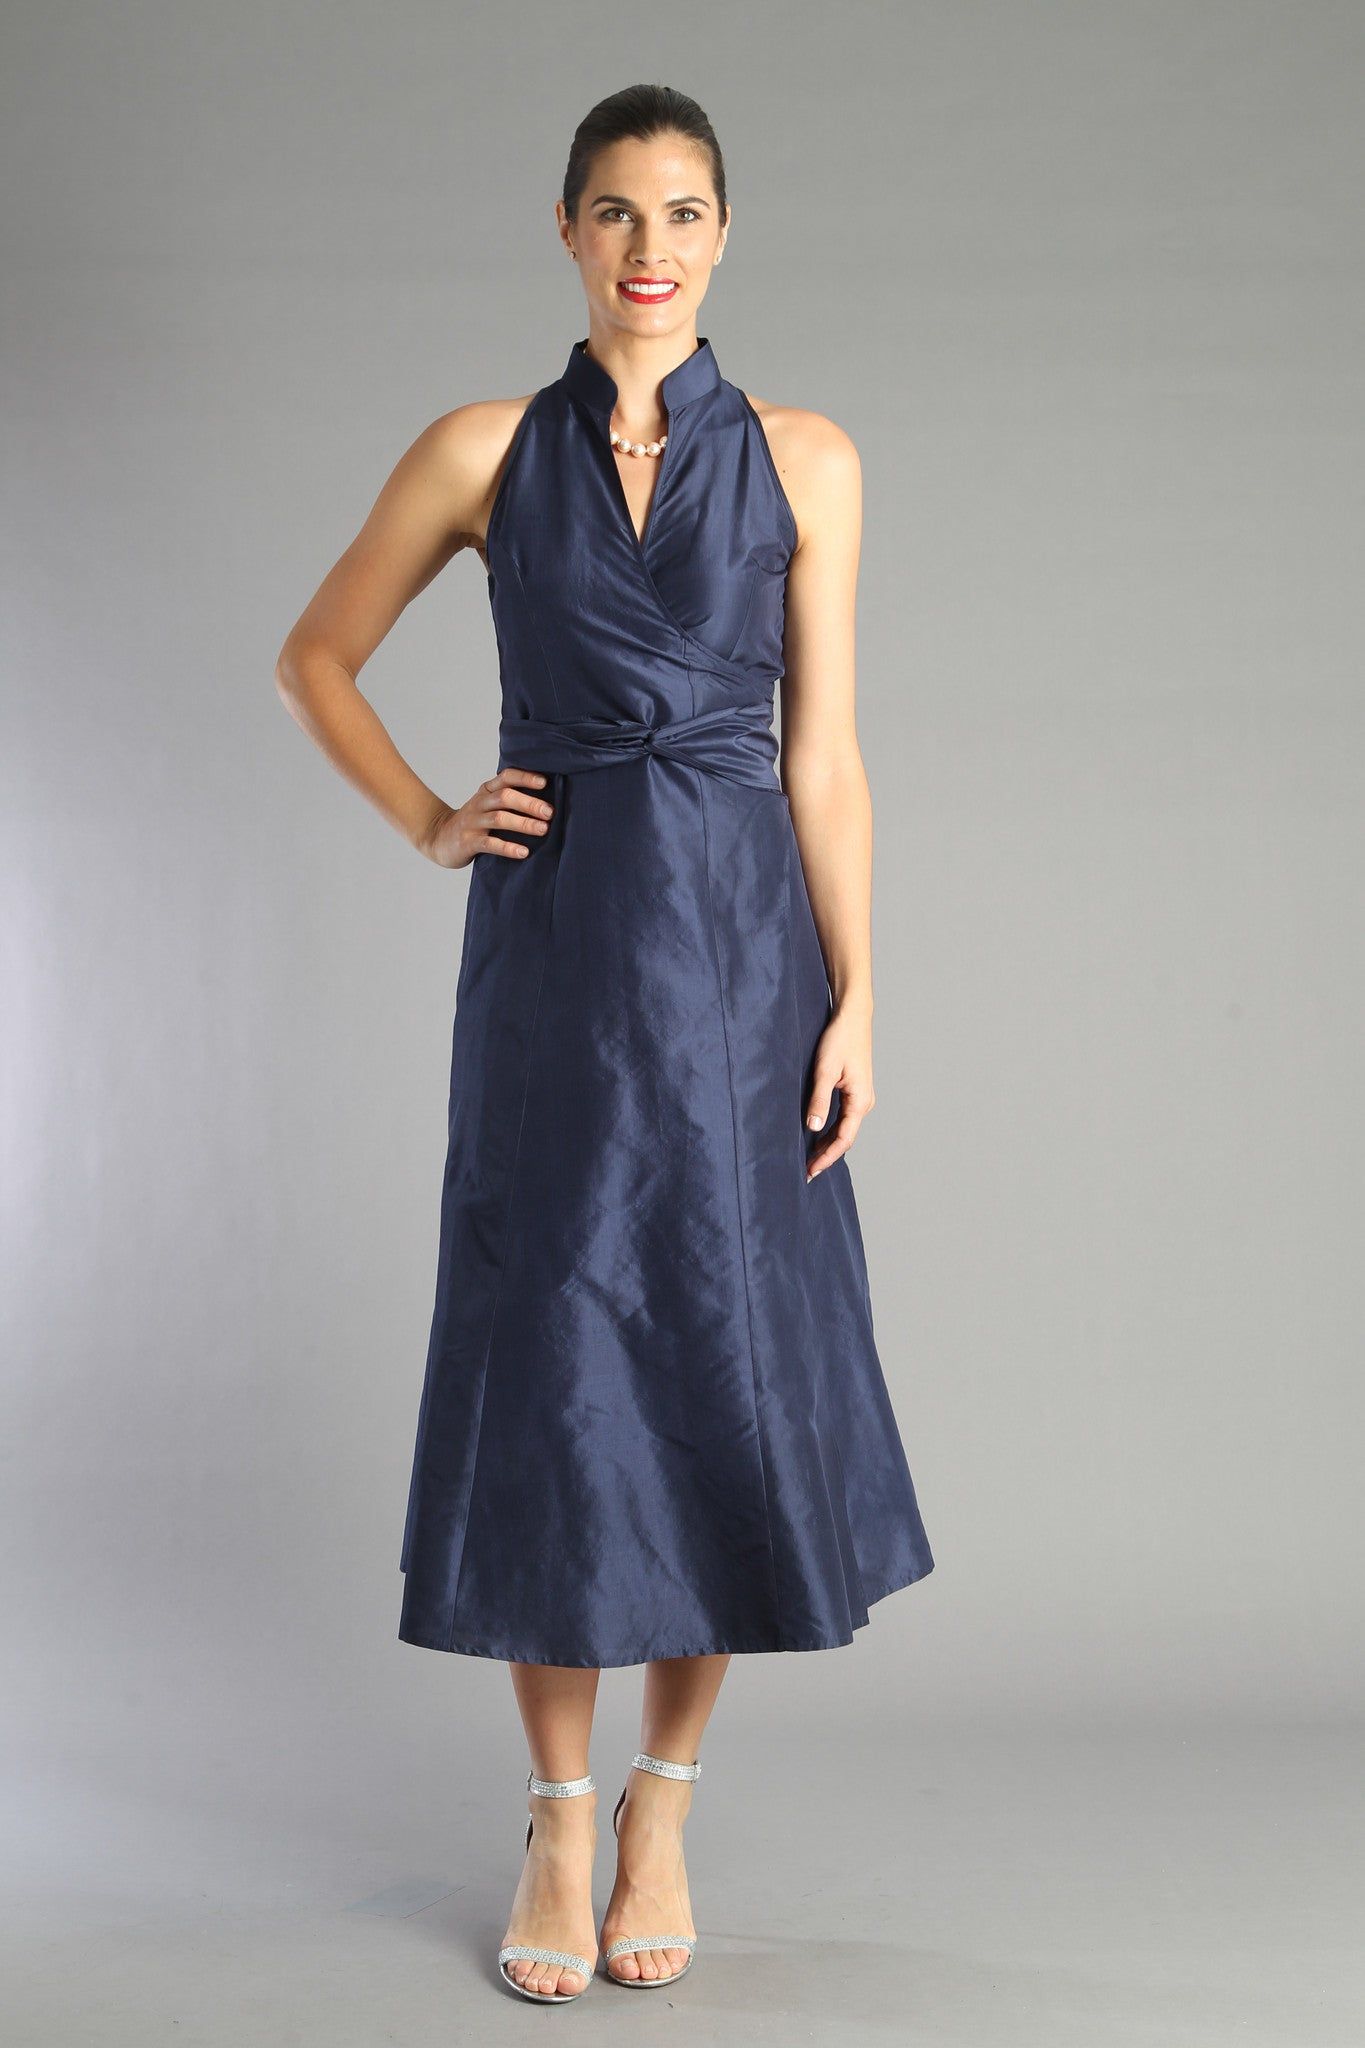 Silk Wrap Dress Outfit Ideas